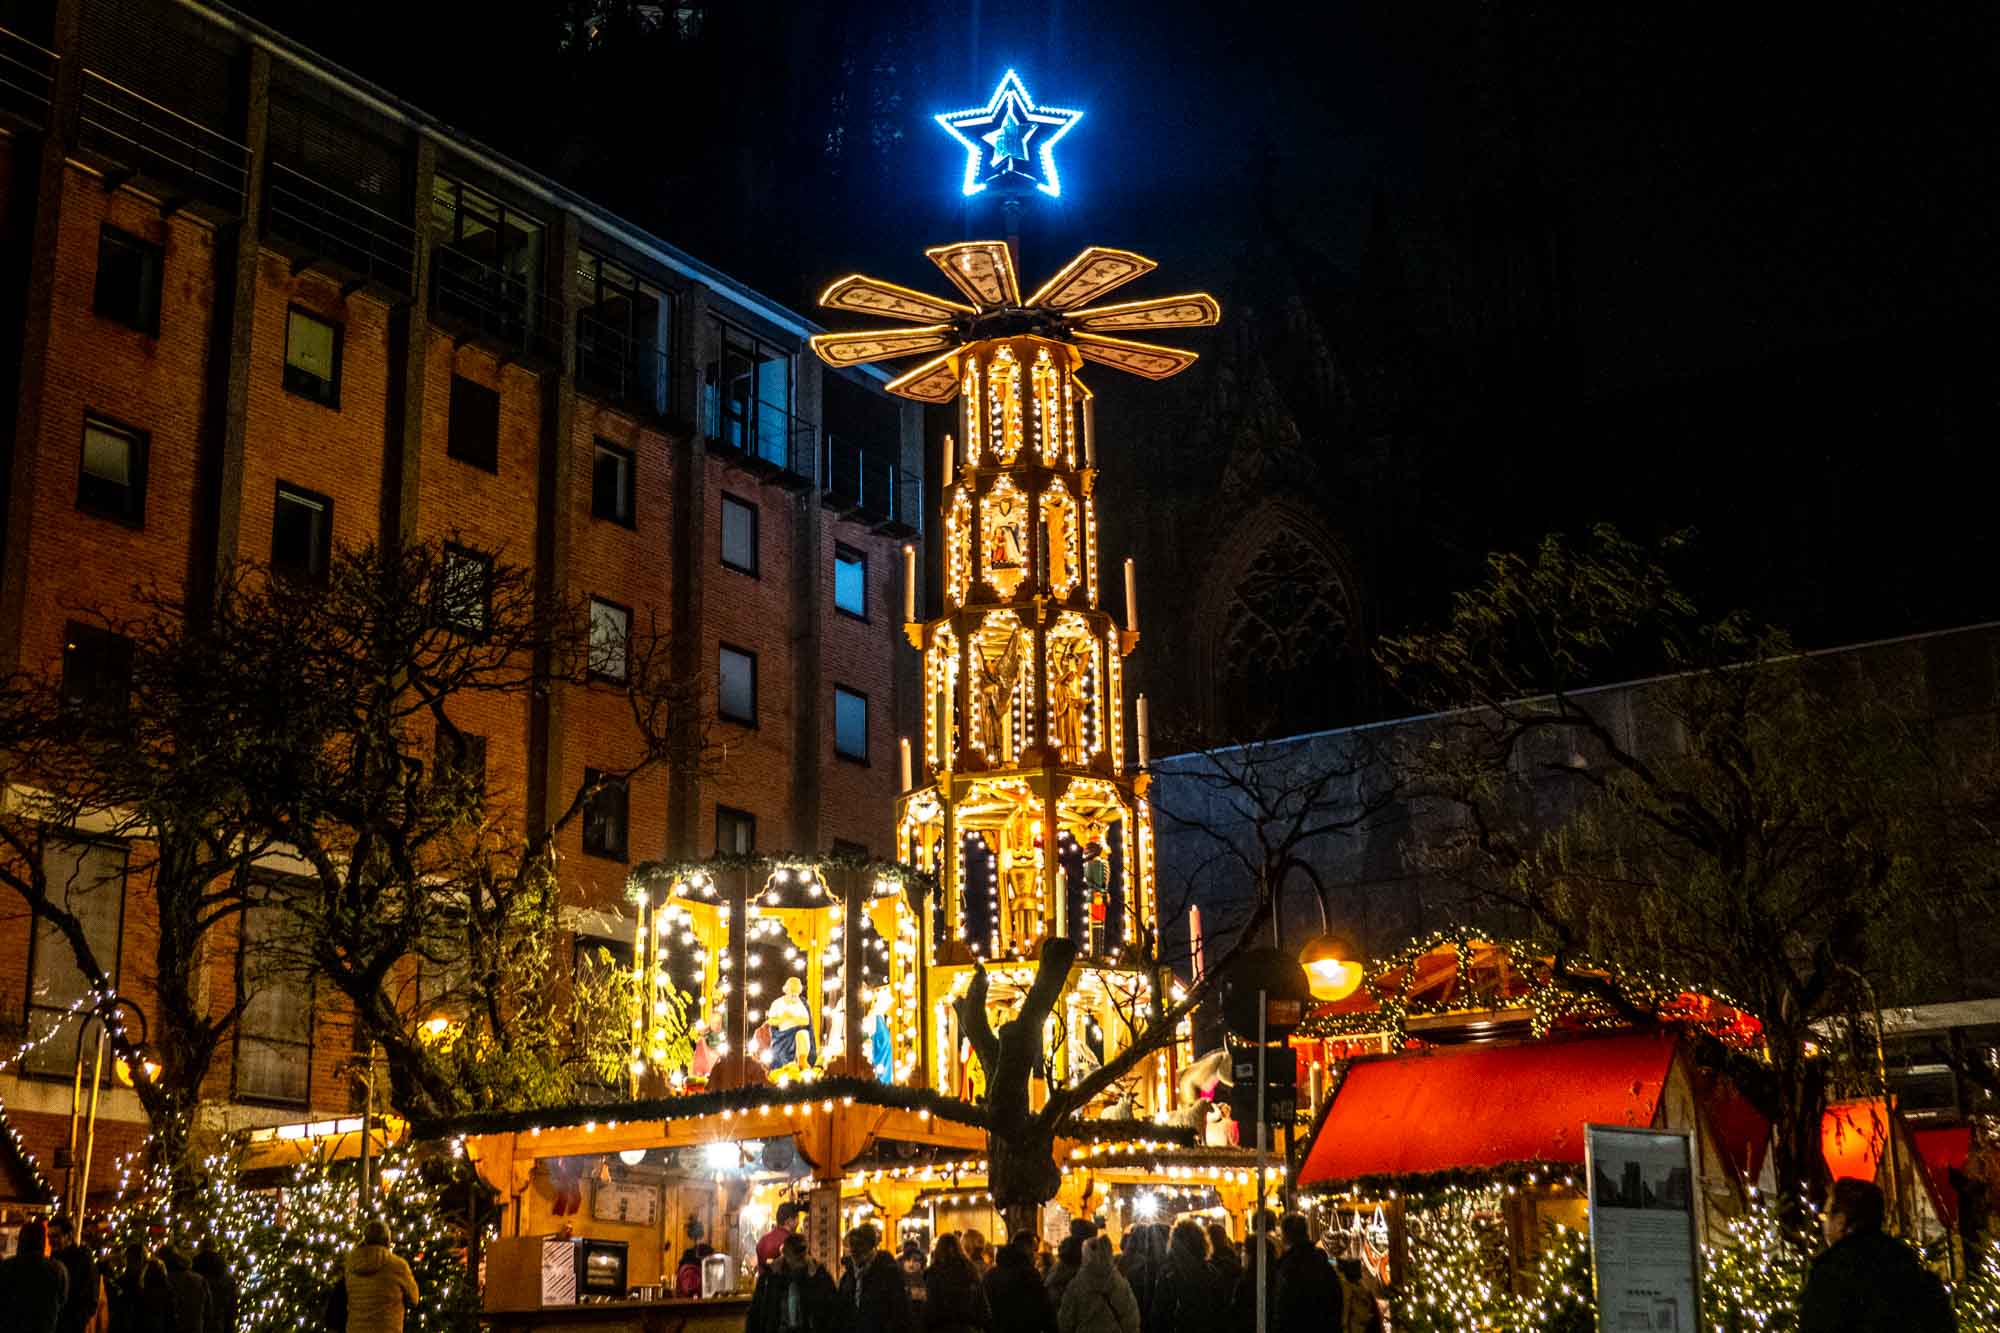 German Christmas pyramid lit up at night